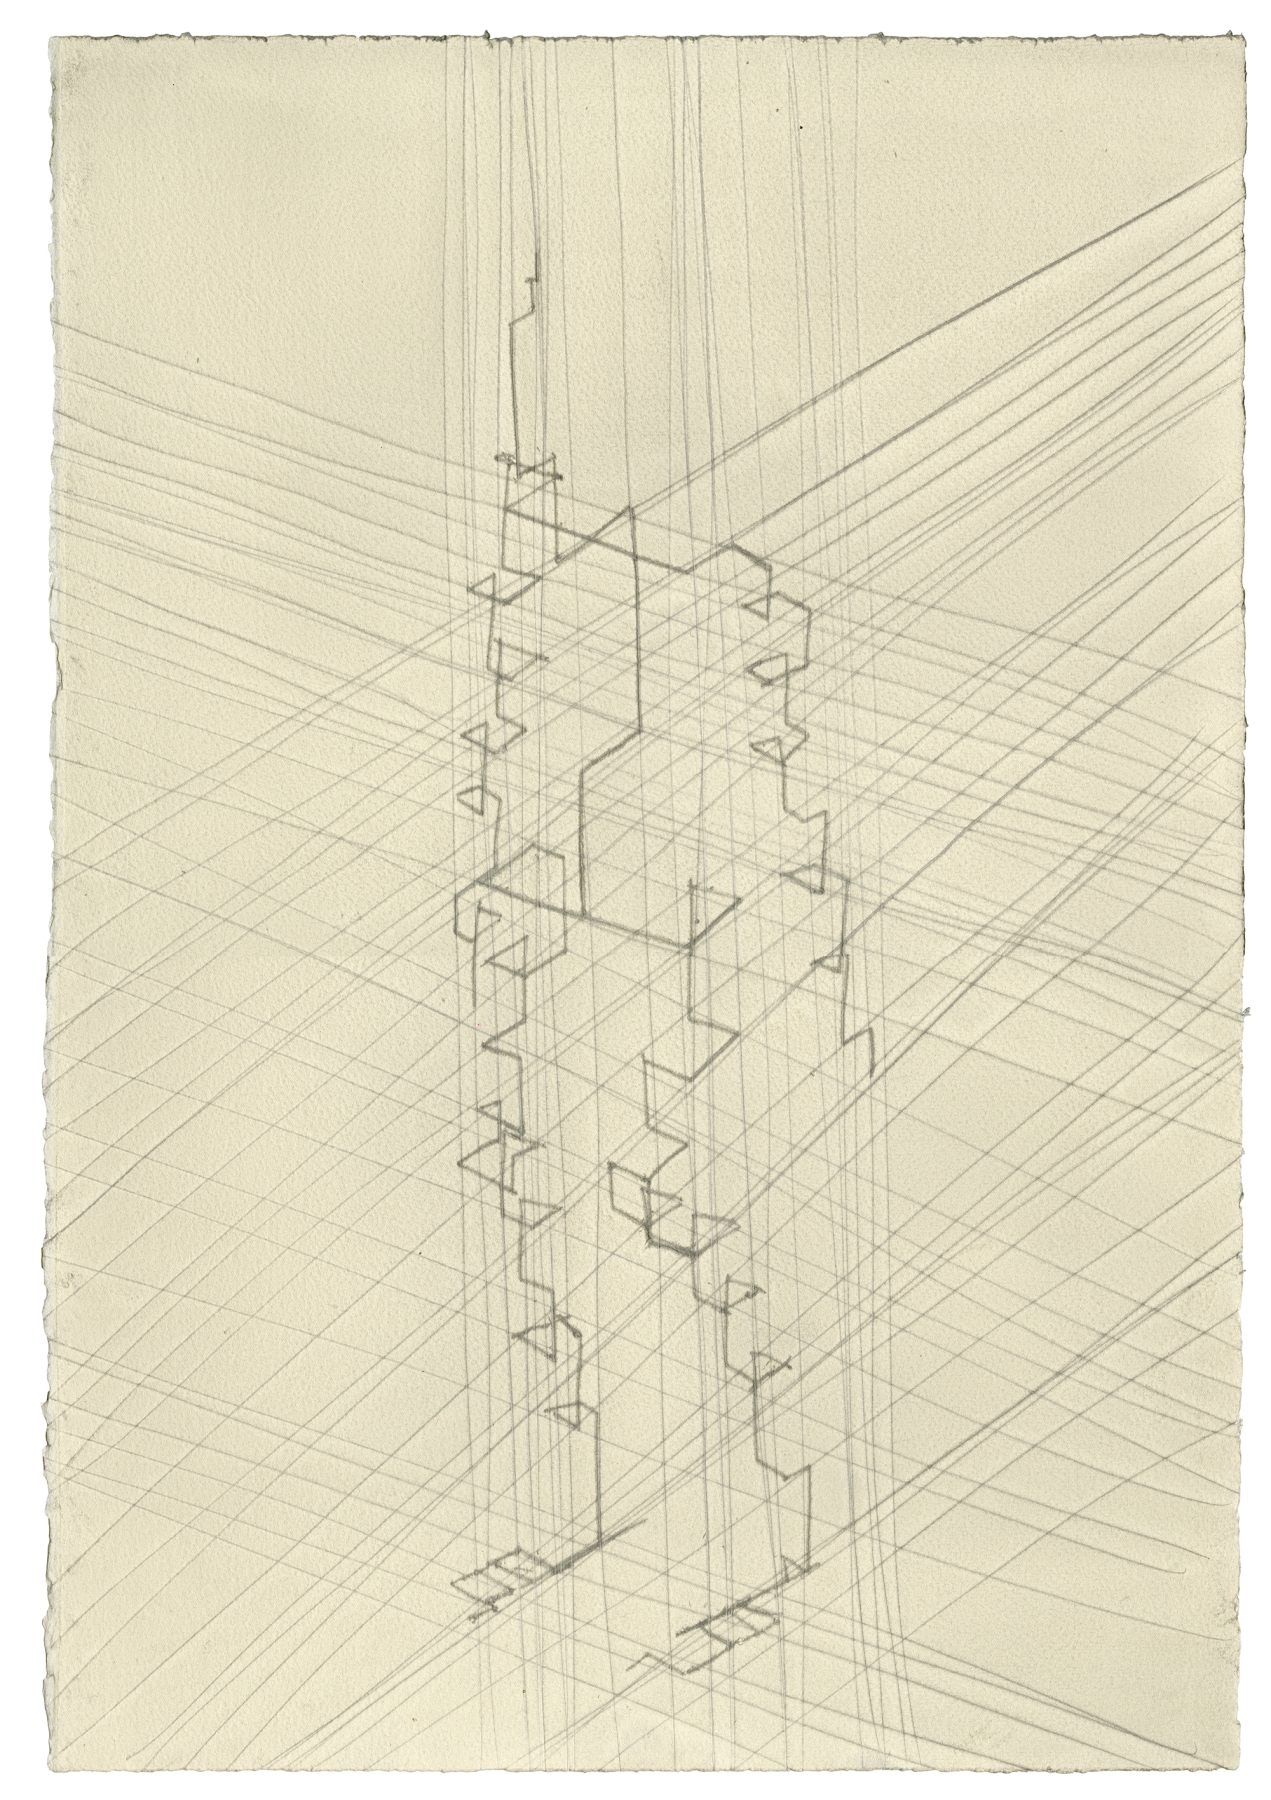 Antony Gormley, BRACE III, 2018, Carbon and casein on paper, 55.7 x 38.5cm &amp;copy; the artist